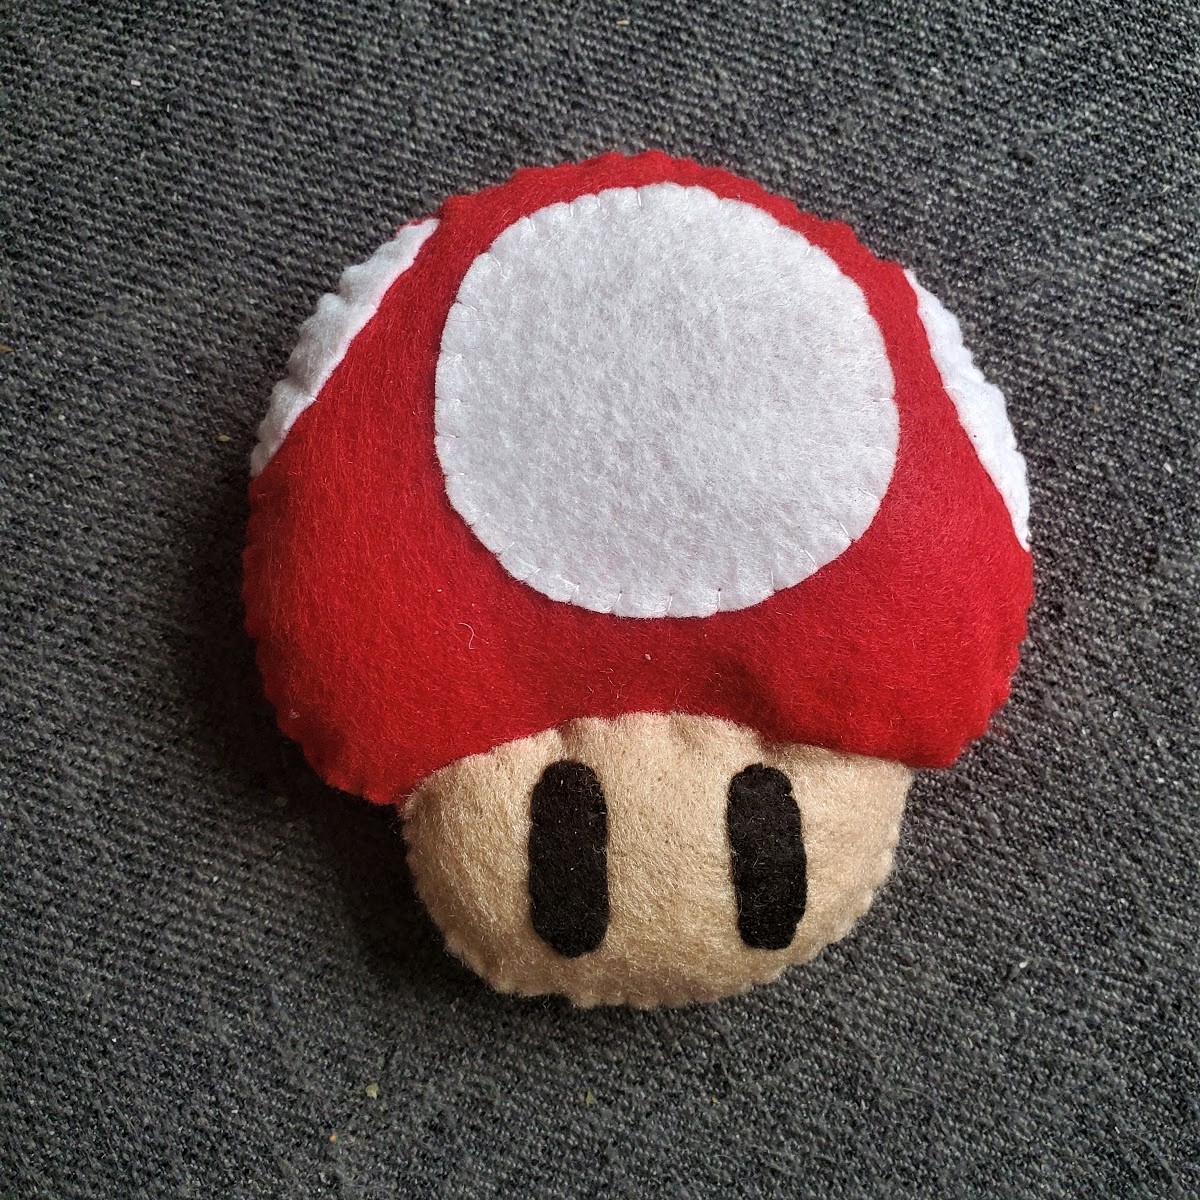 Completed Super Mario Mushroom craft